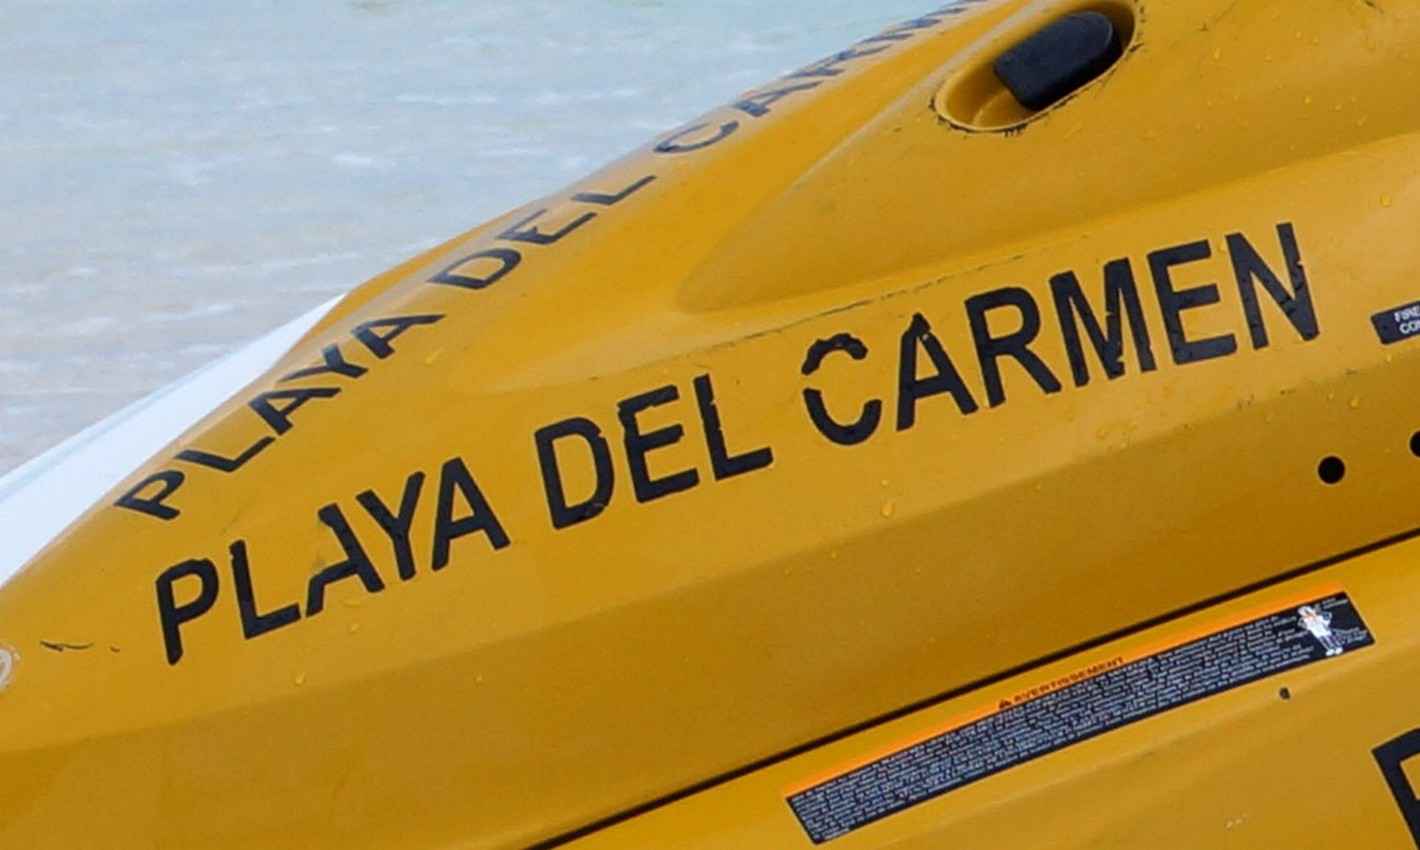 jet-ski-on-beach-labeled-with-playa-del-carmen